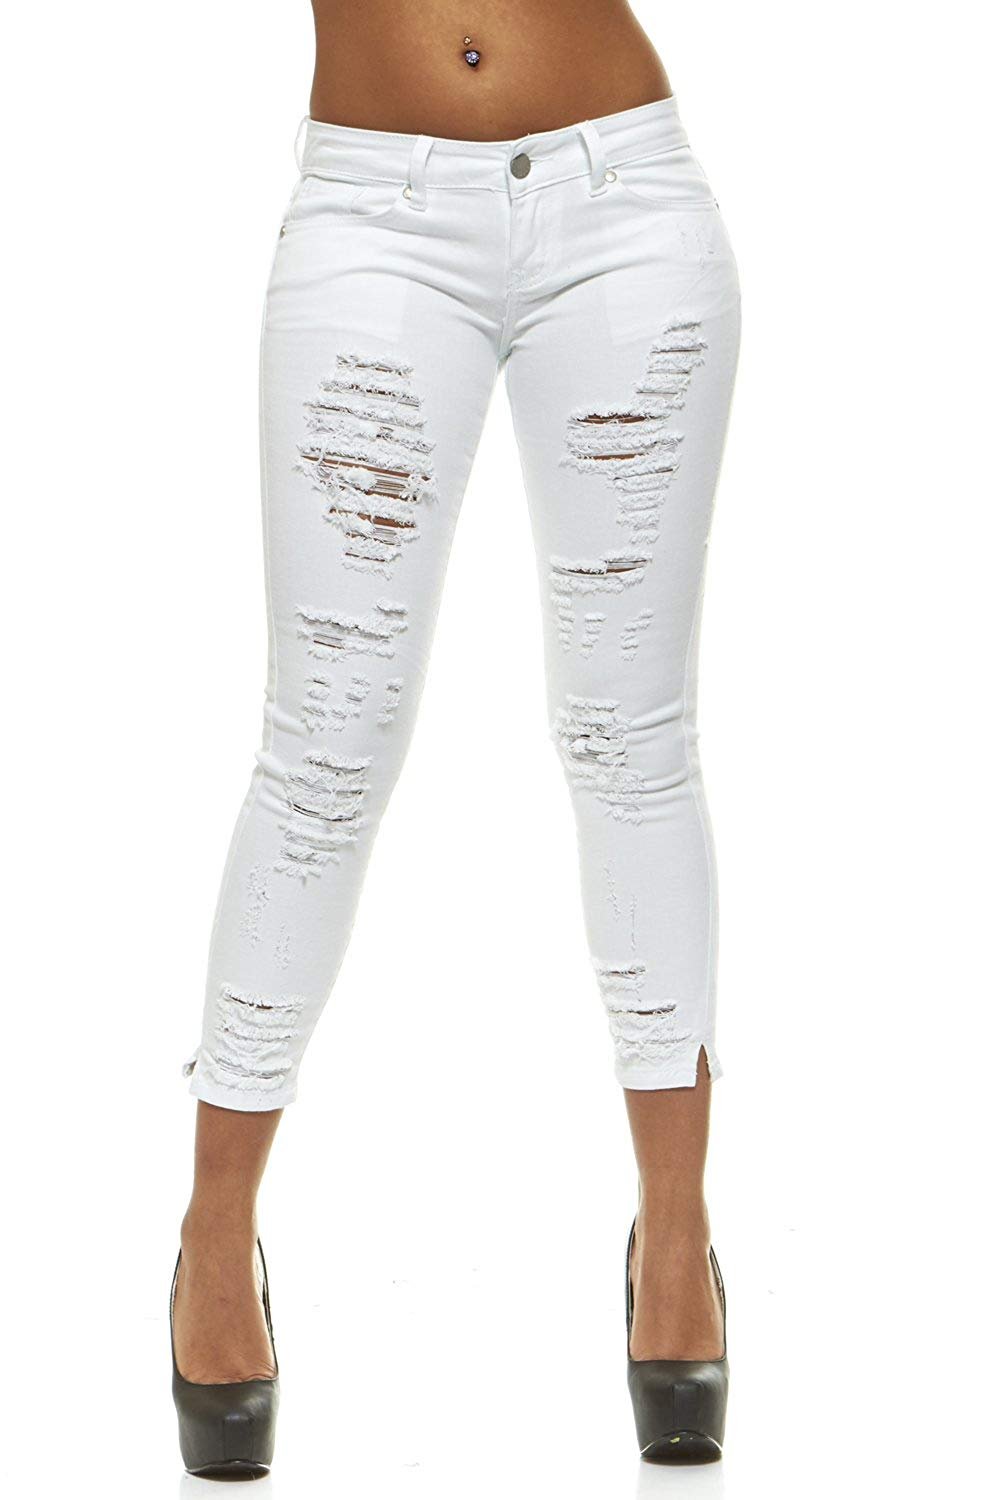 VIP Jeans Teen Girlss Juniors Plus Ripped Distressed Raw Hem Skinny Denim Pants Sexy White Size 5 - image 1 of 7